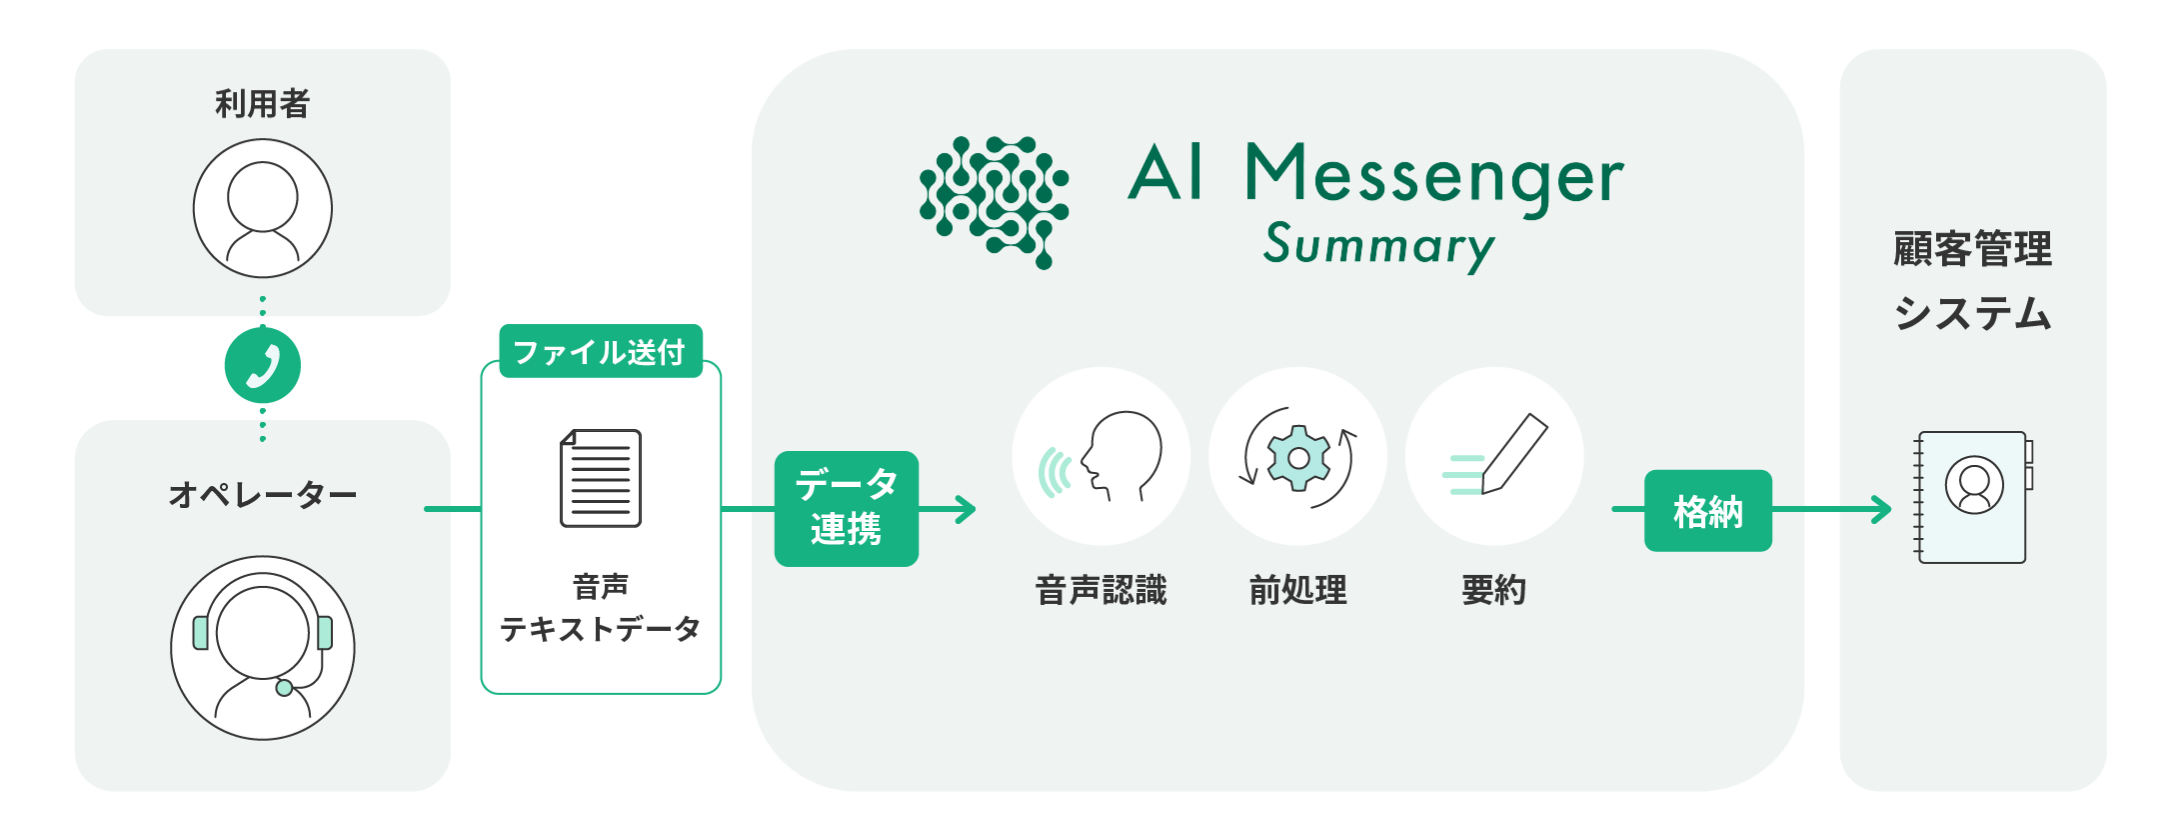 AI Messenger Summary